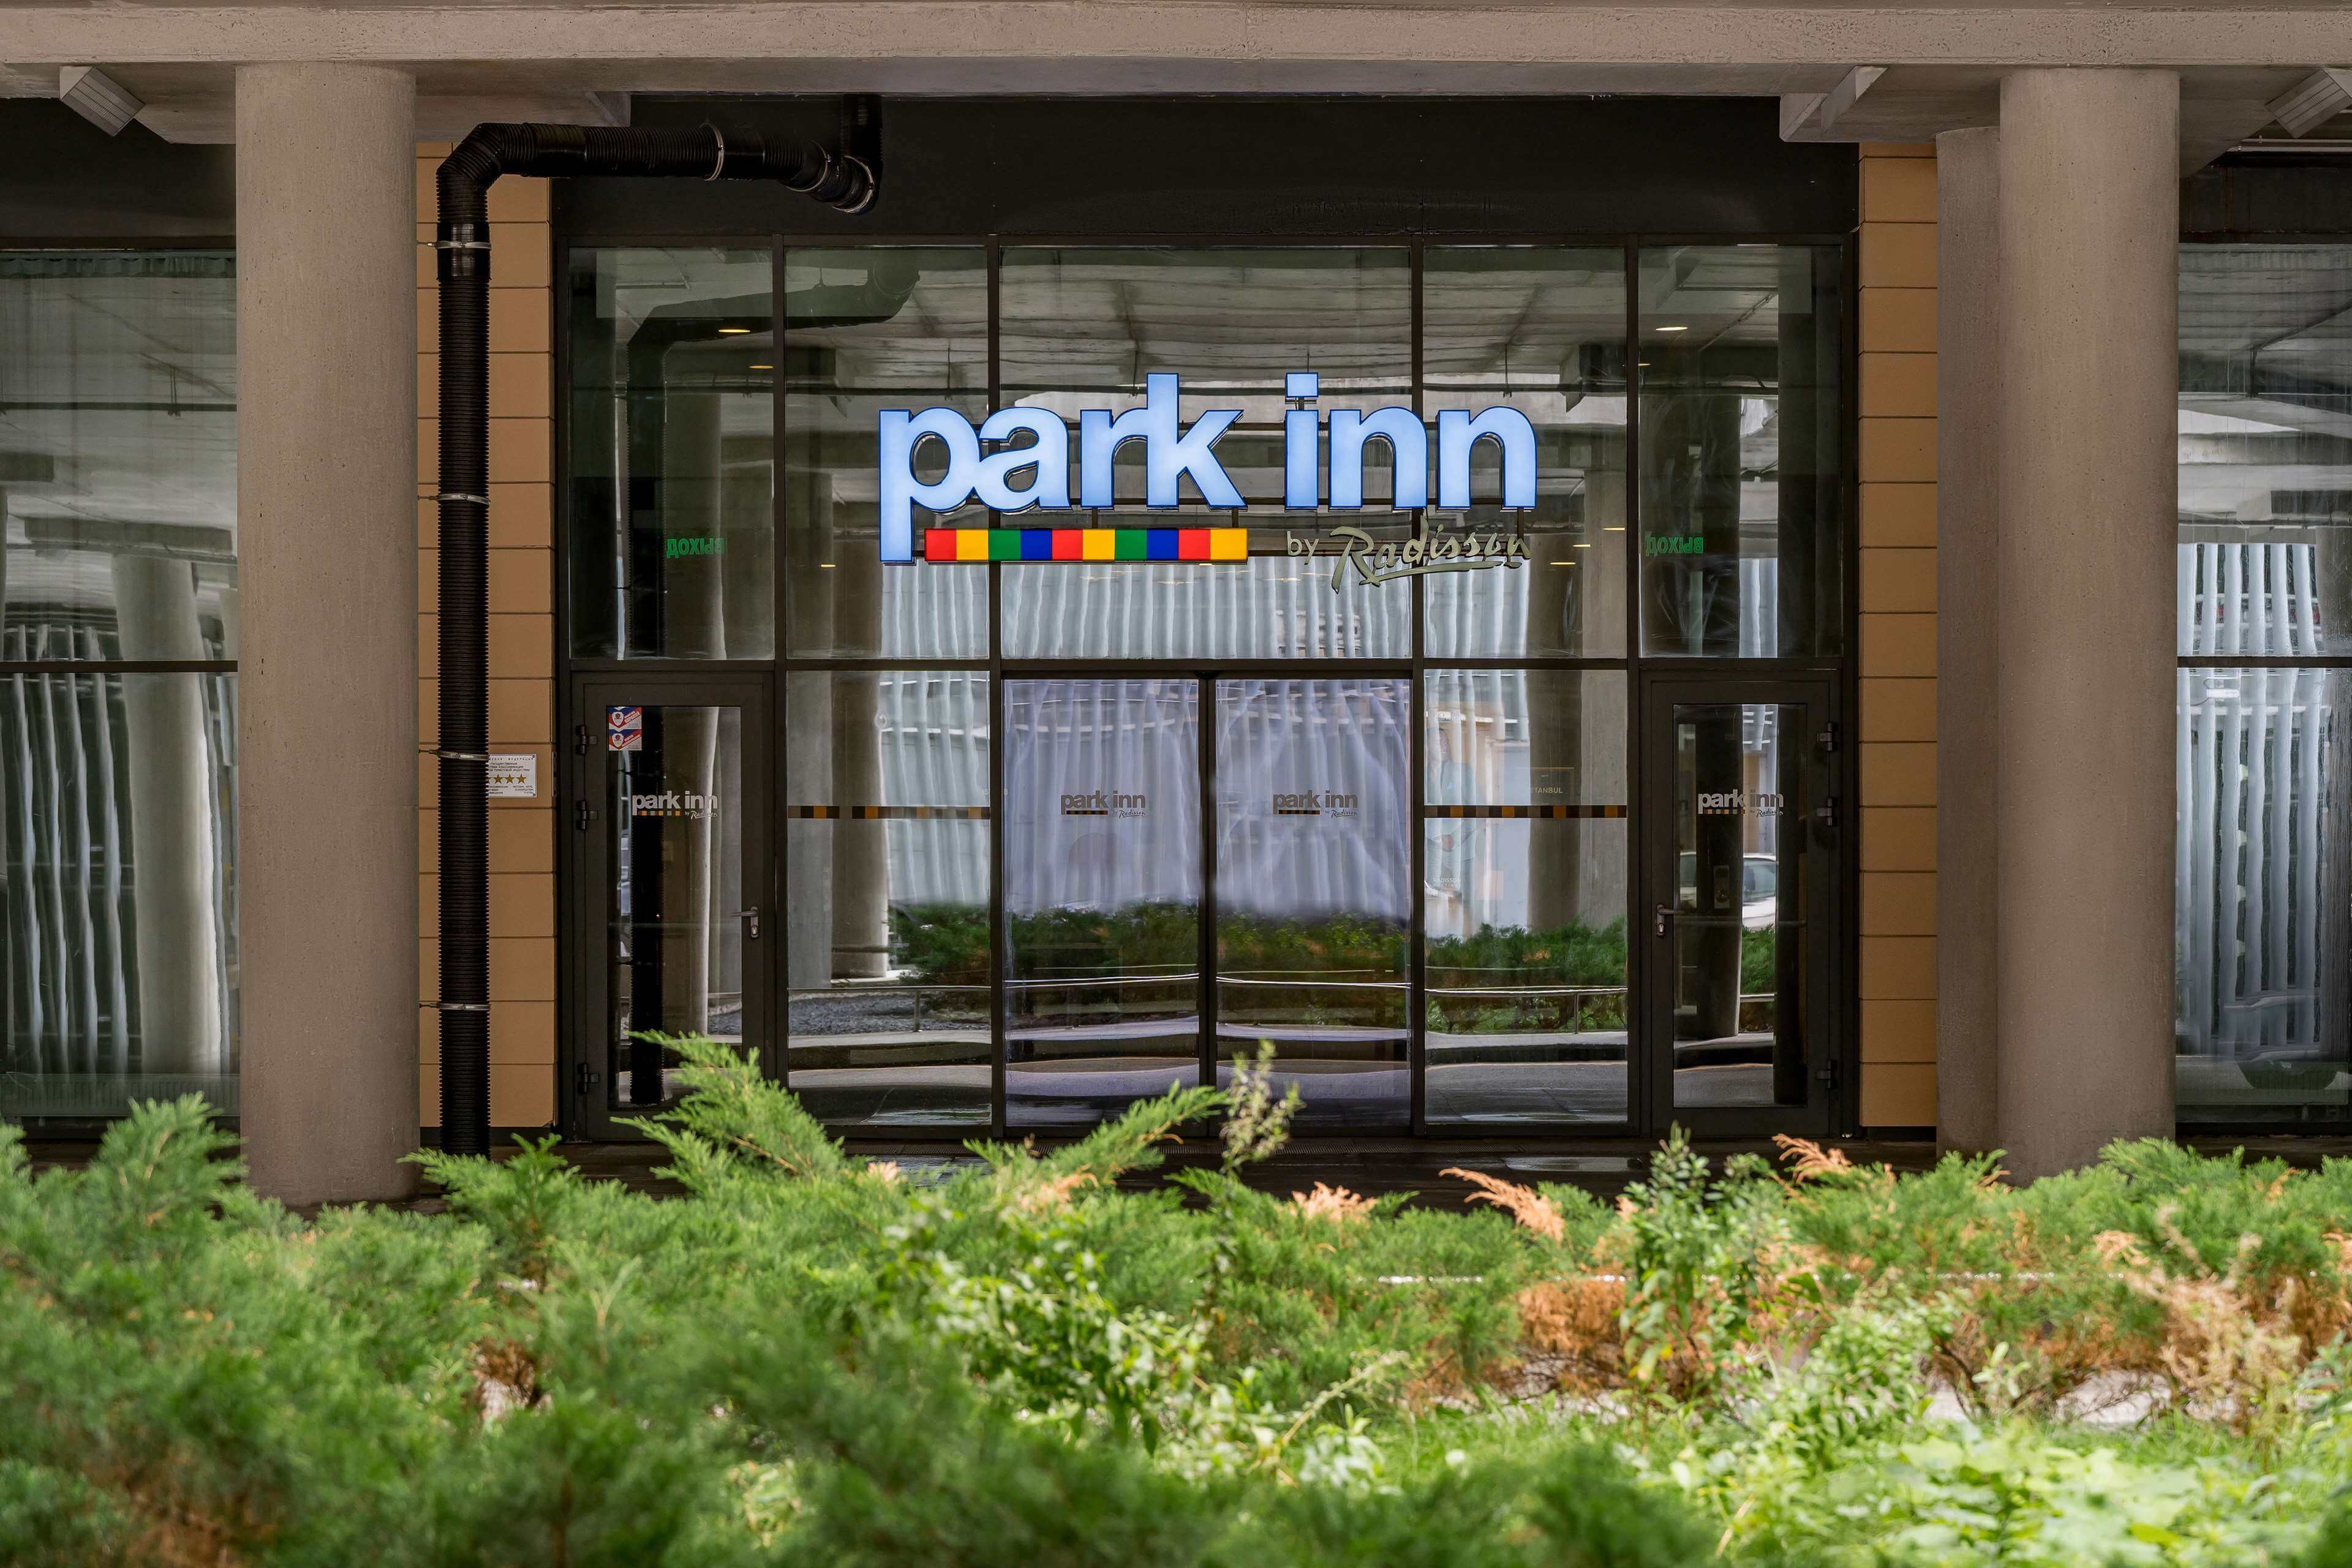 Узнаваемые буквы - park inn - на стеклянном фасаде отеля.